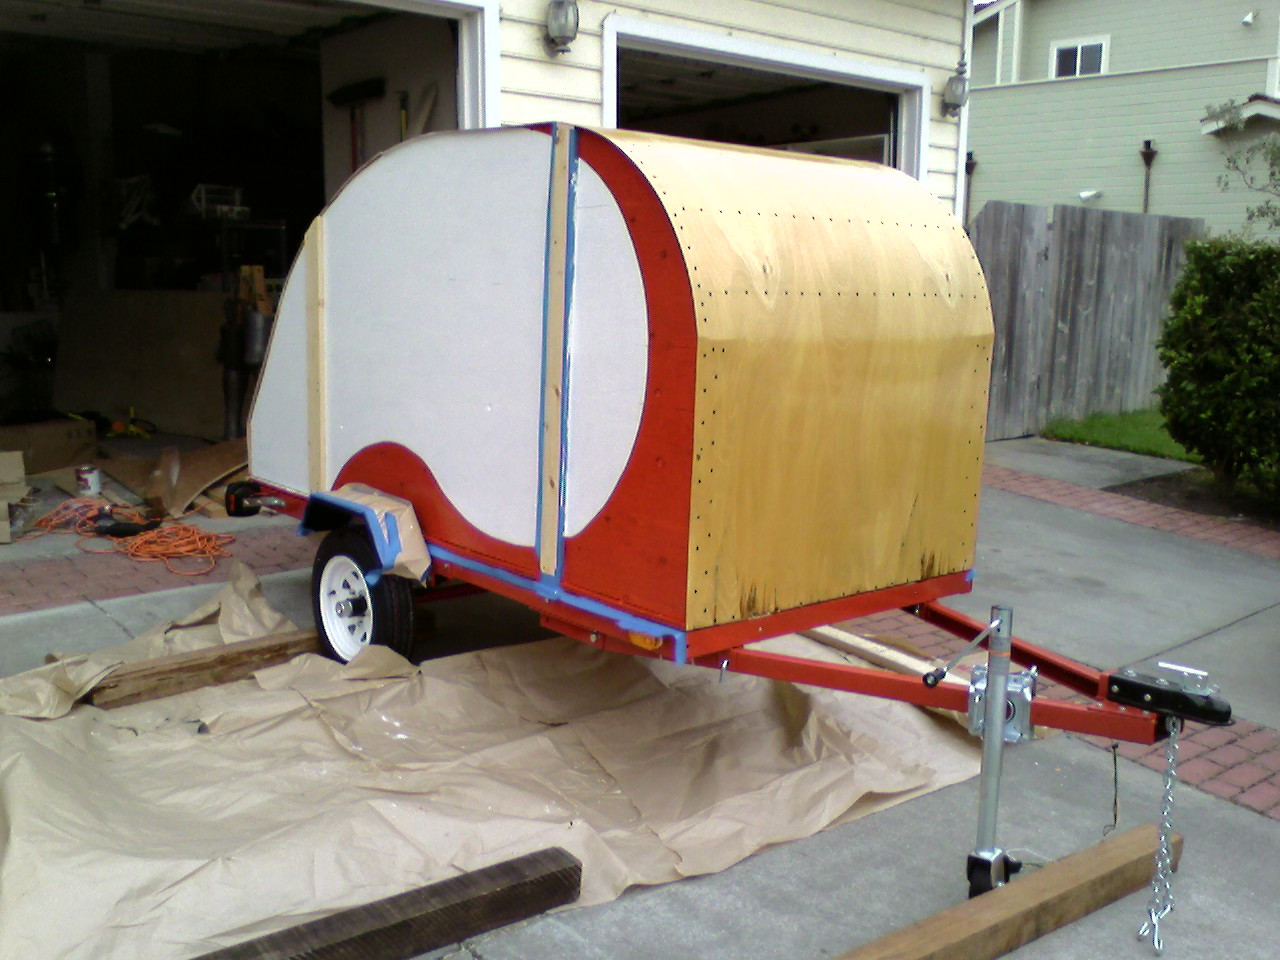 DIY Teardrop Trailer Plans
 Useful Homemade wood enclosed trailer